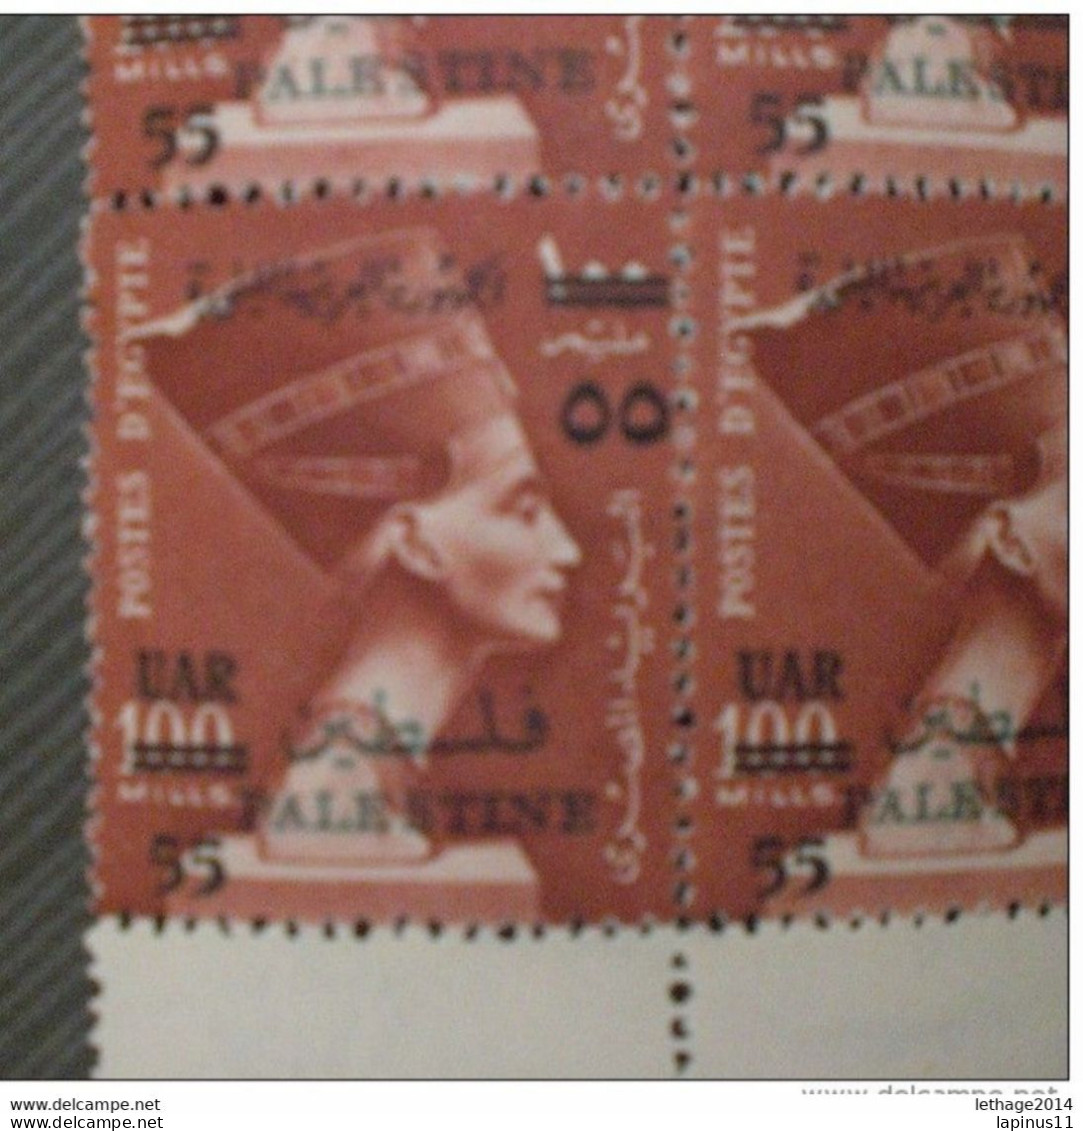 EGITTO EGYPT EGYPTE PALESTINE 1959 Queen Nefertiti UAR Postage Stamps Overprinted "PALESTINE" In English And Arabic MNH - Nuevos